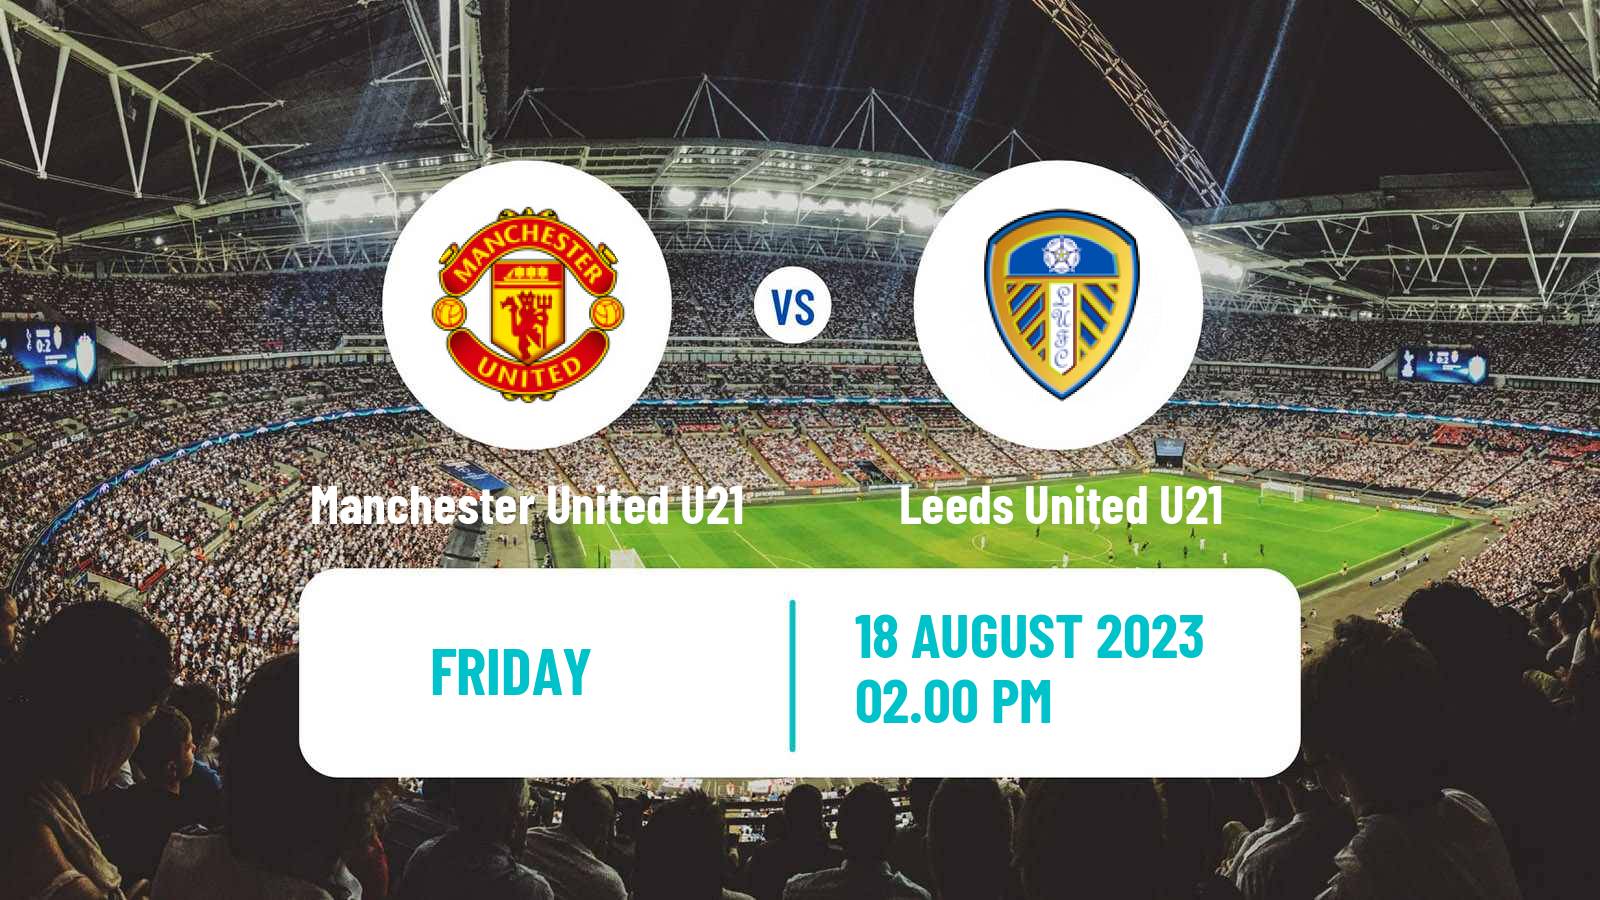 Soccer English Premier League 2 Manchester United U21 - Leeds United U21